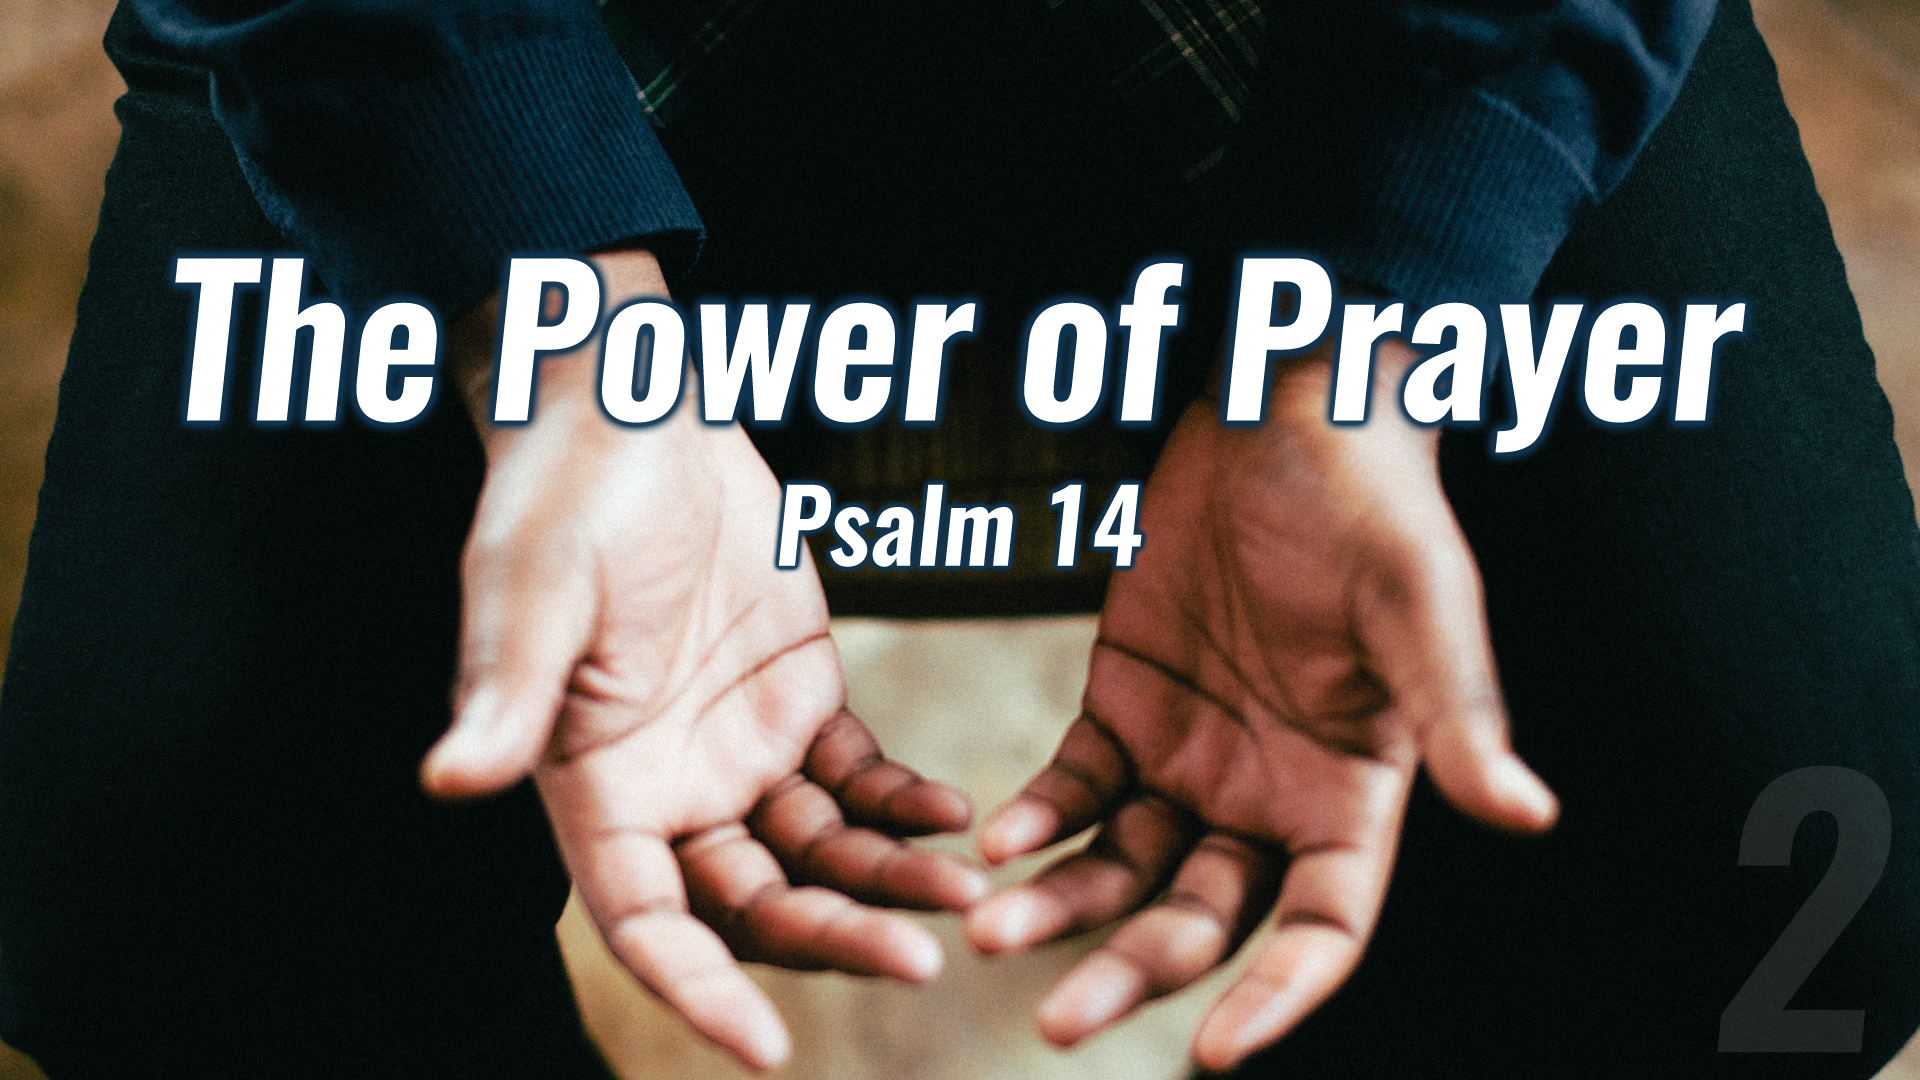 The Power of Prayer, Part 2